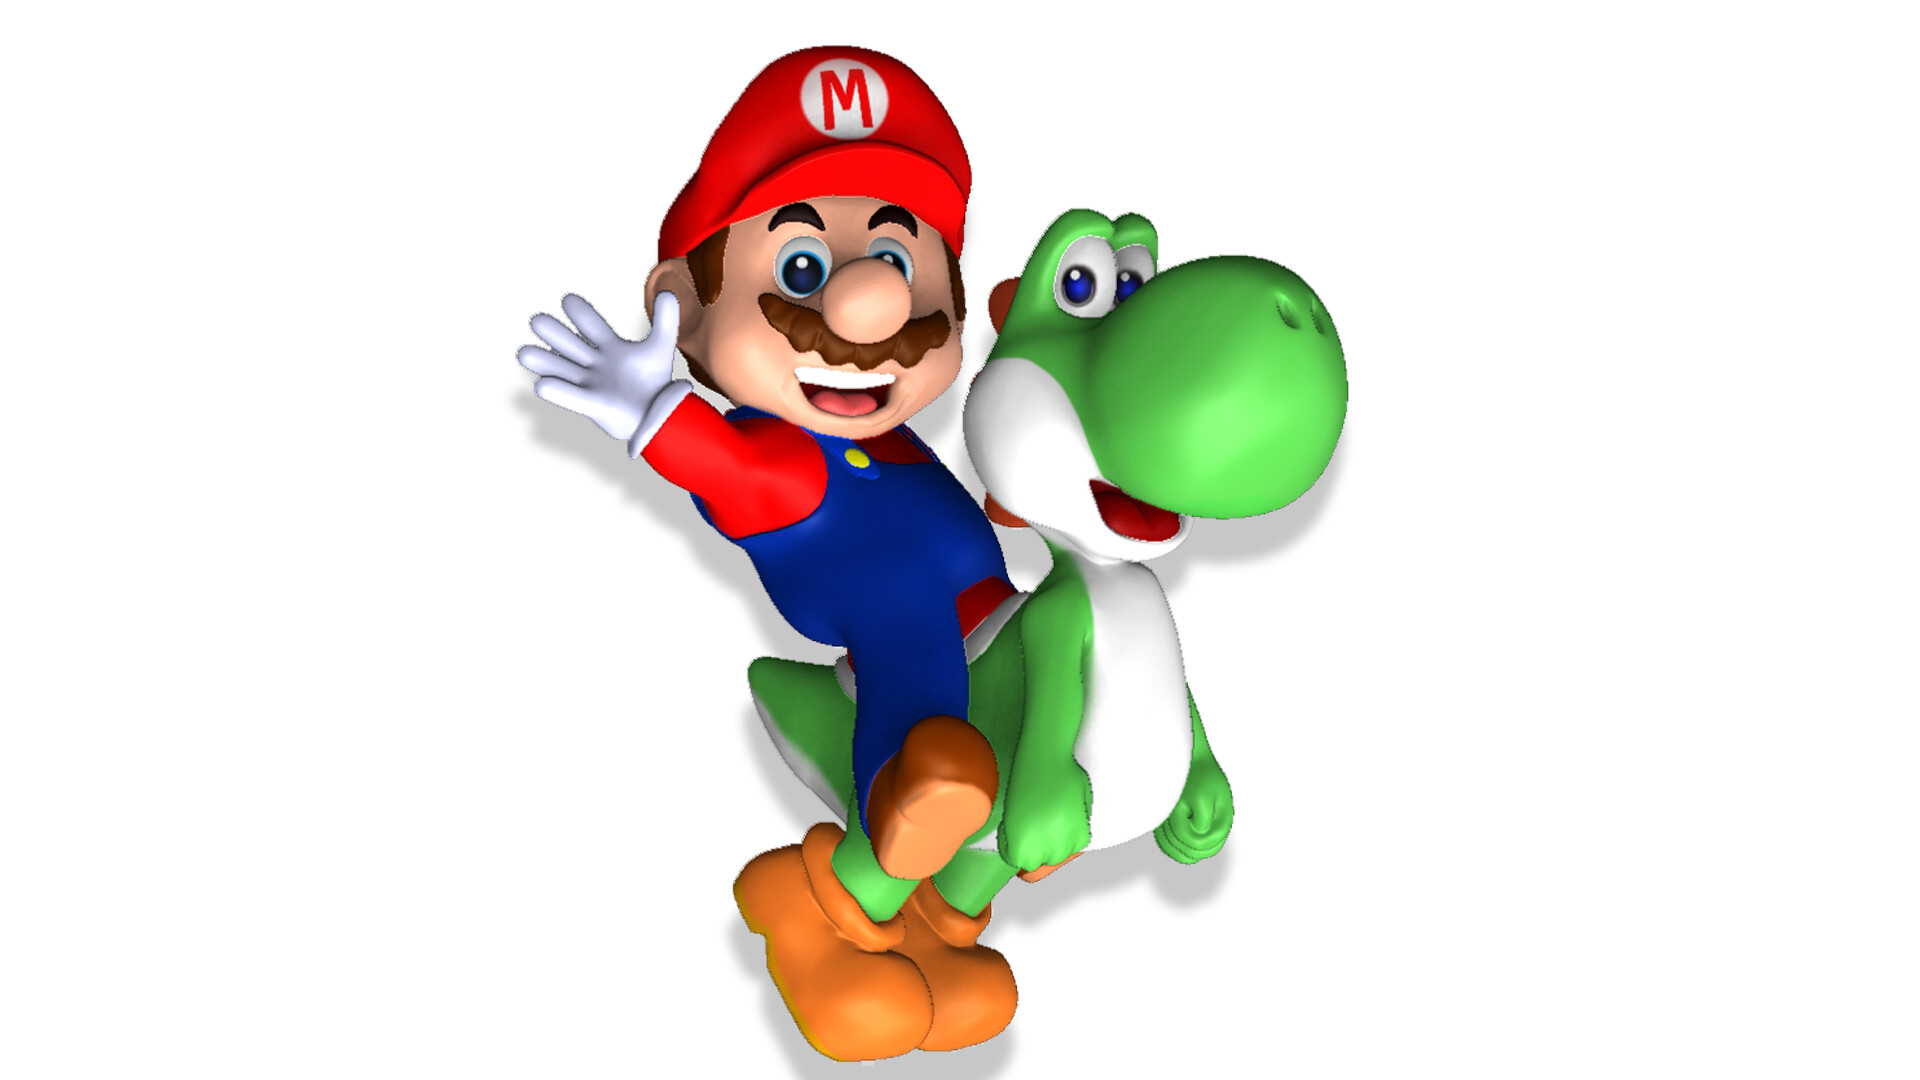 ArtStation - Mario and Yoshi